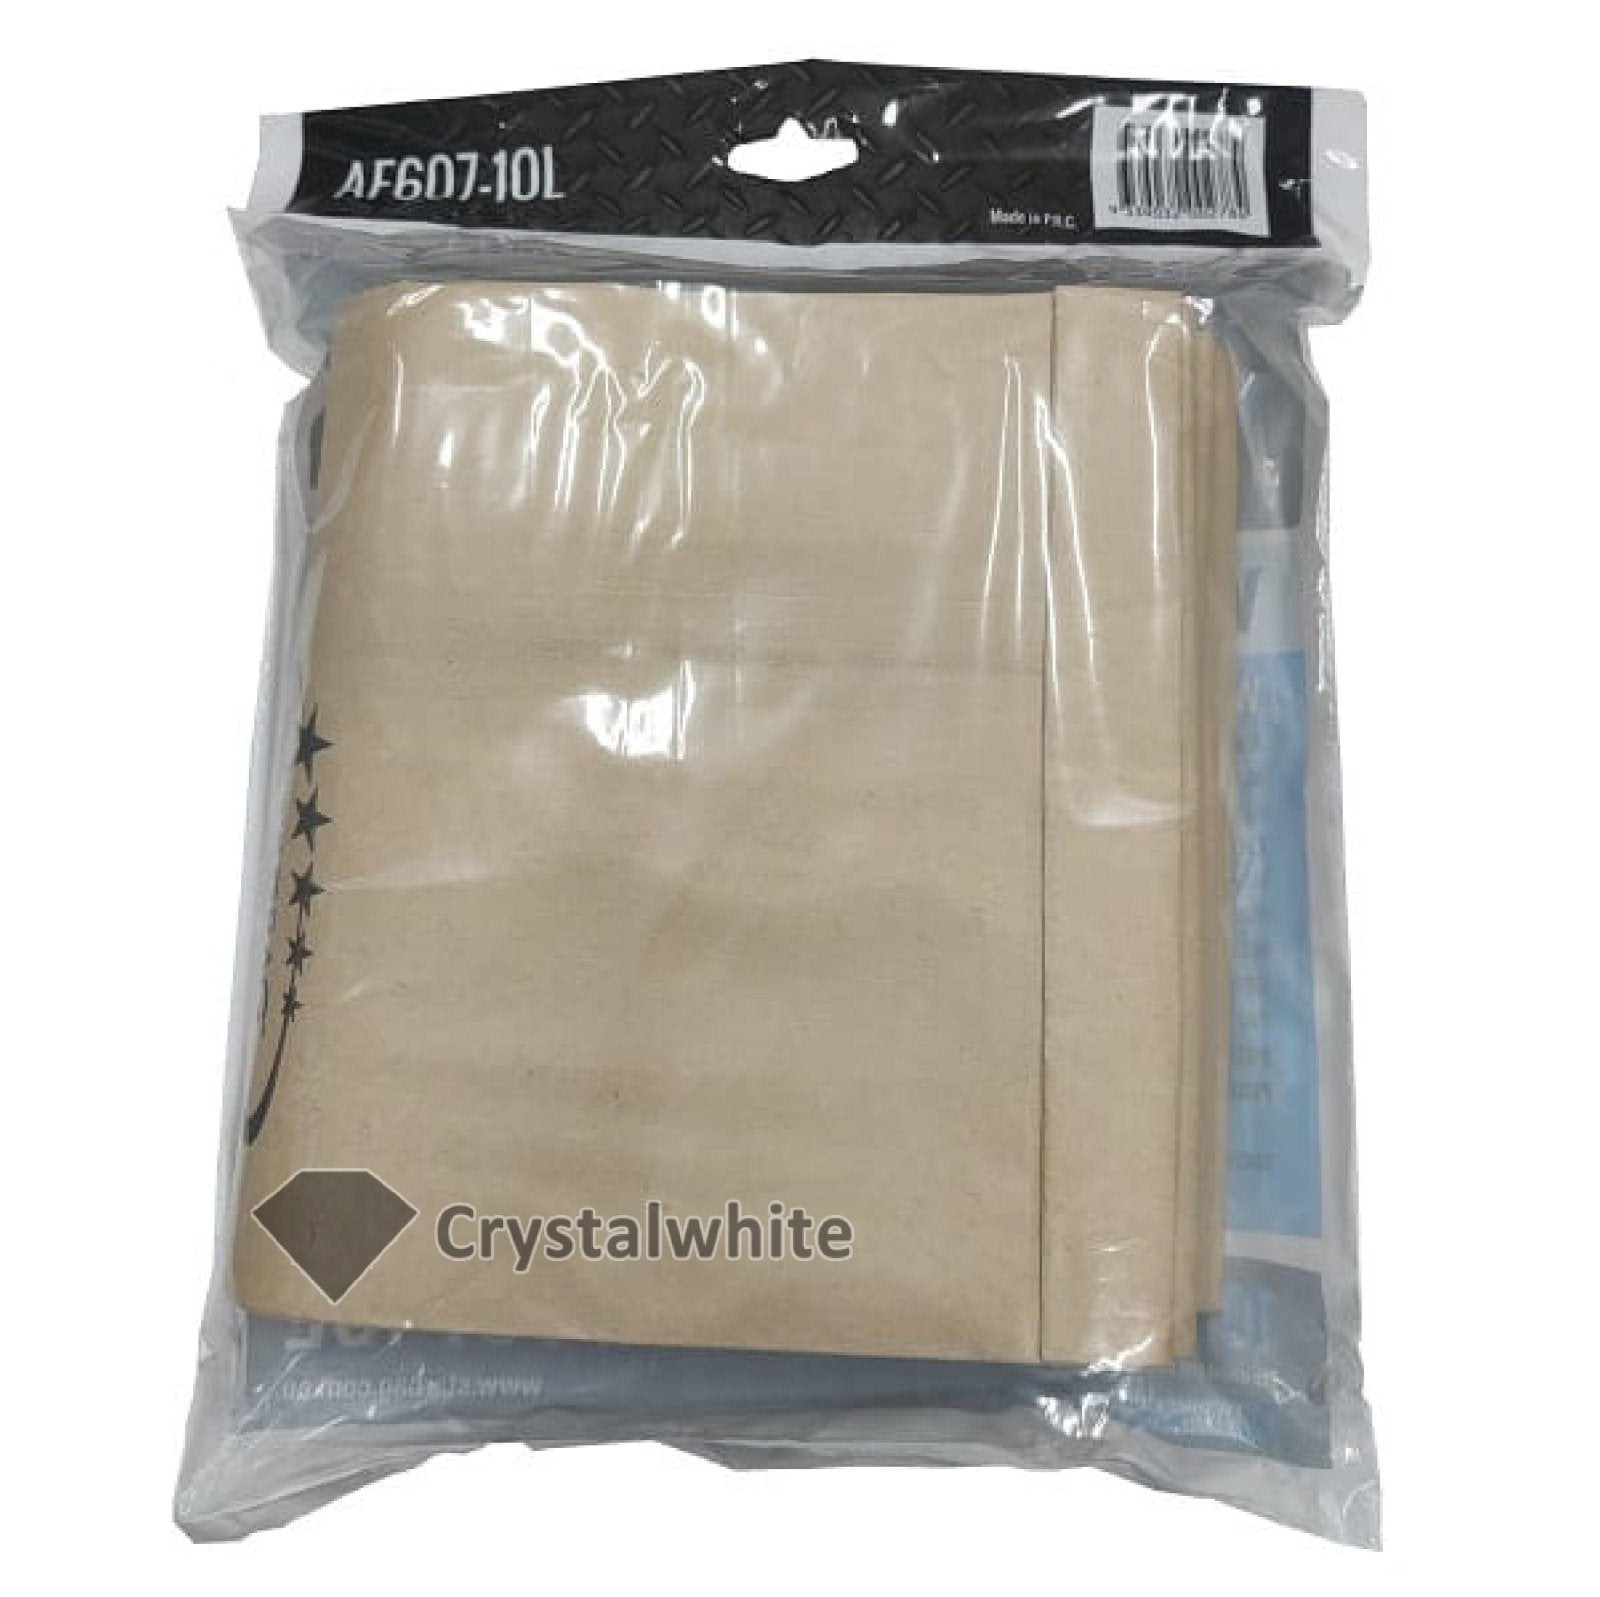 Starbag | AF607-10L Vacuum Cleaner Bag | Crystalwhite Cleaning Supplies Melbourne